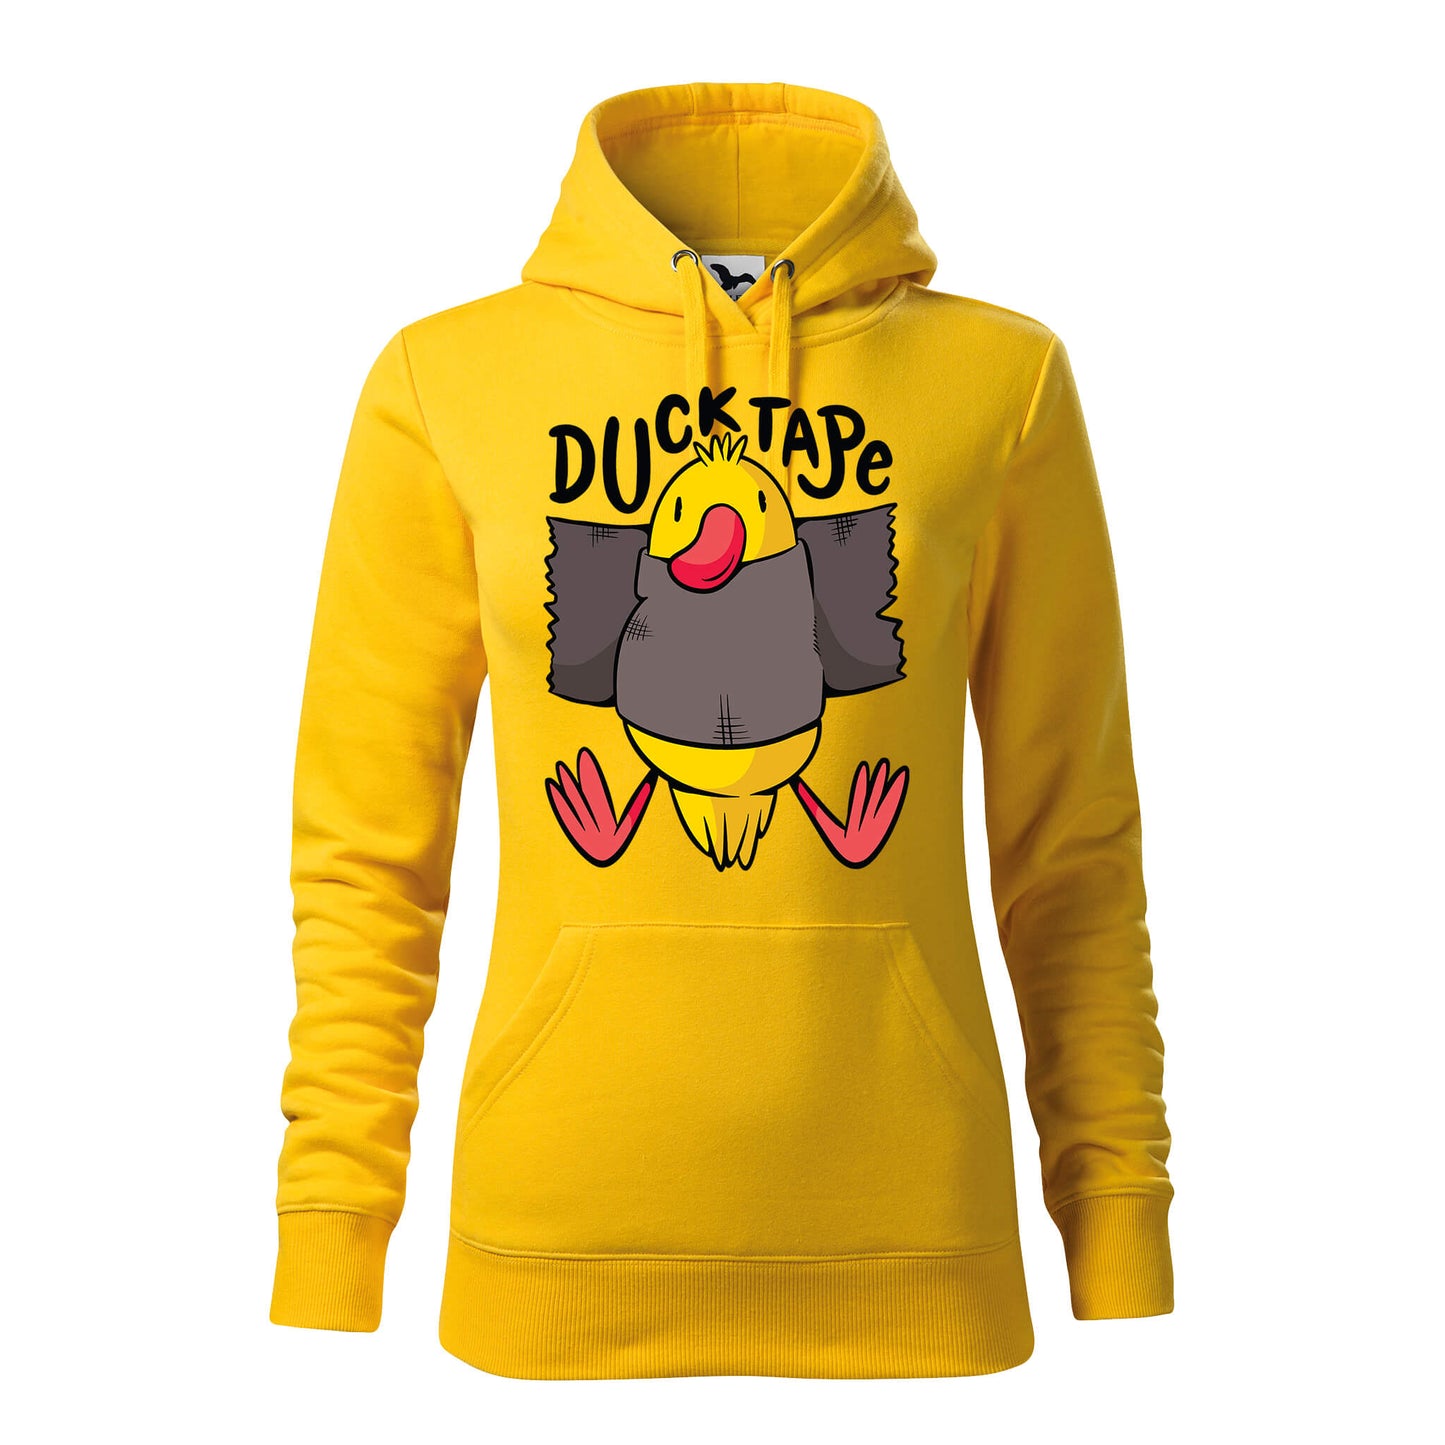 Ducktapetshirt hoodie - rvdesignprint